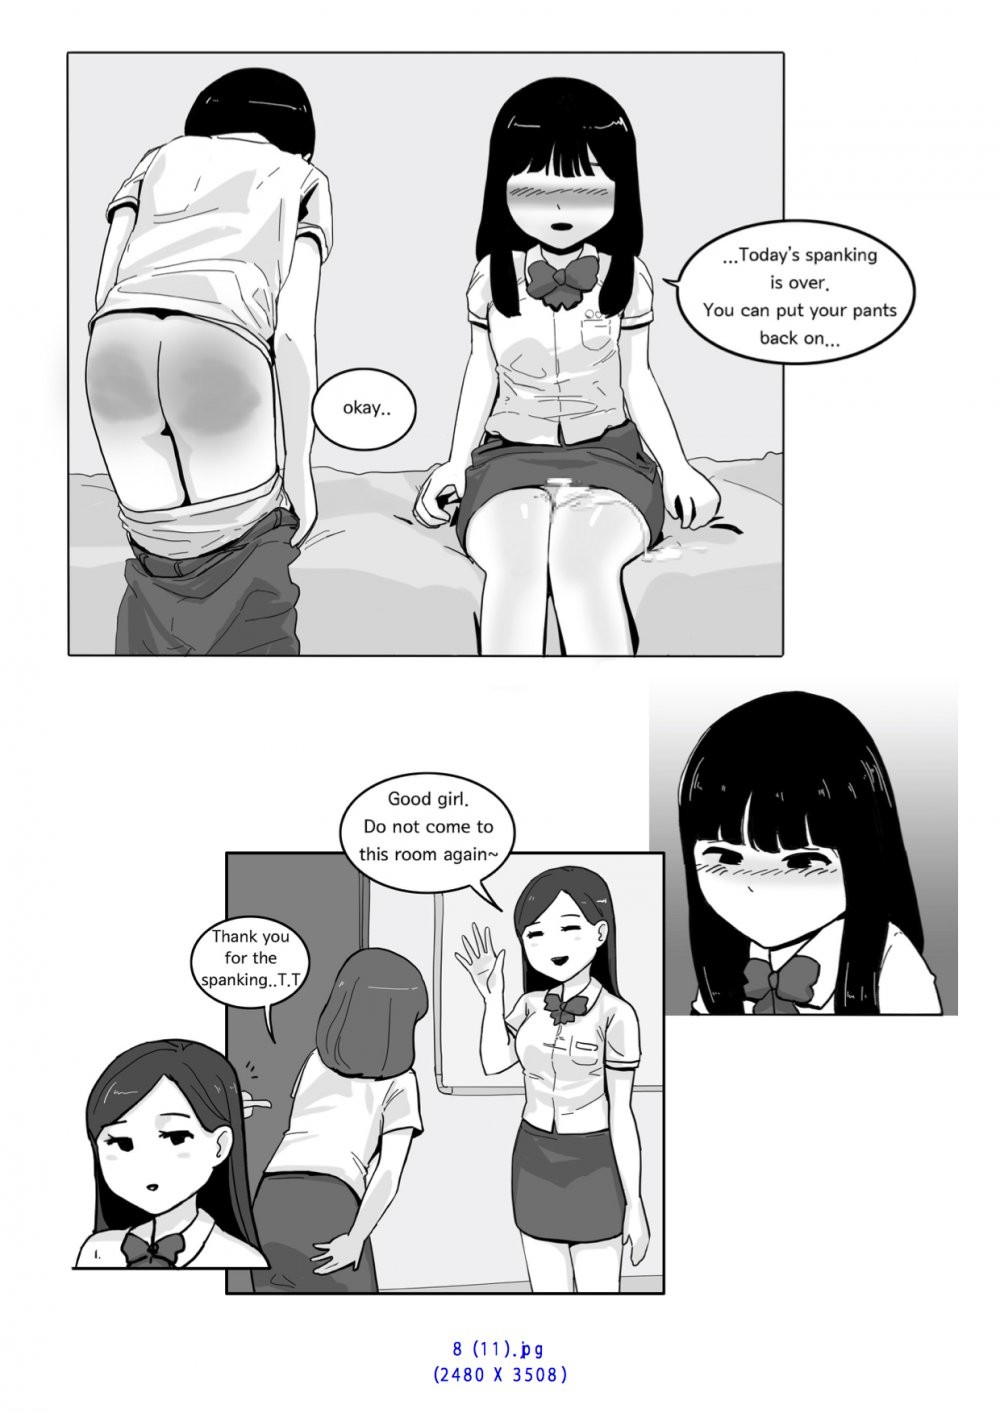 Spanking - Oshiritataki porn comic picture 29